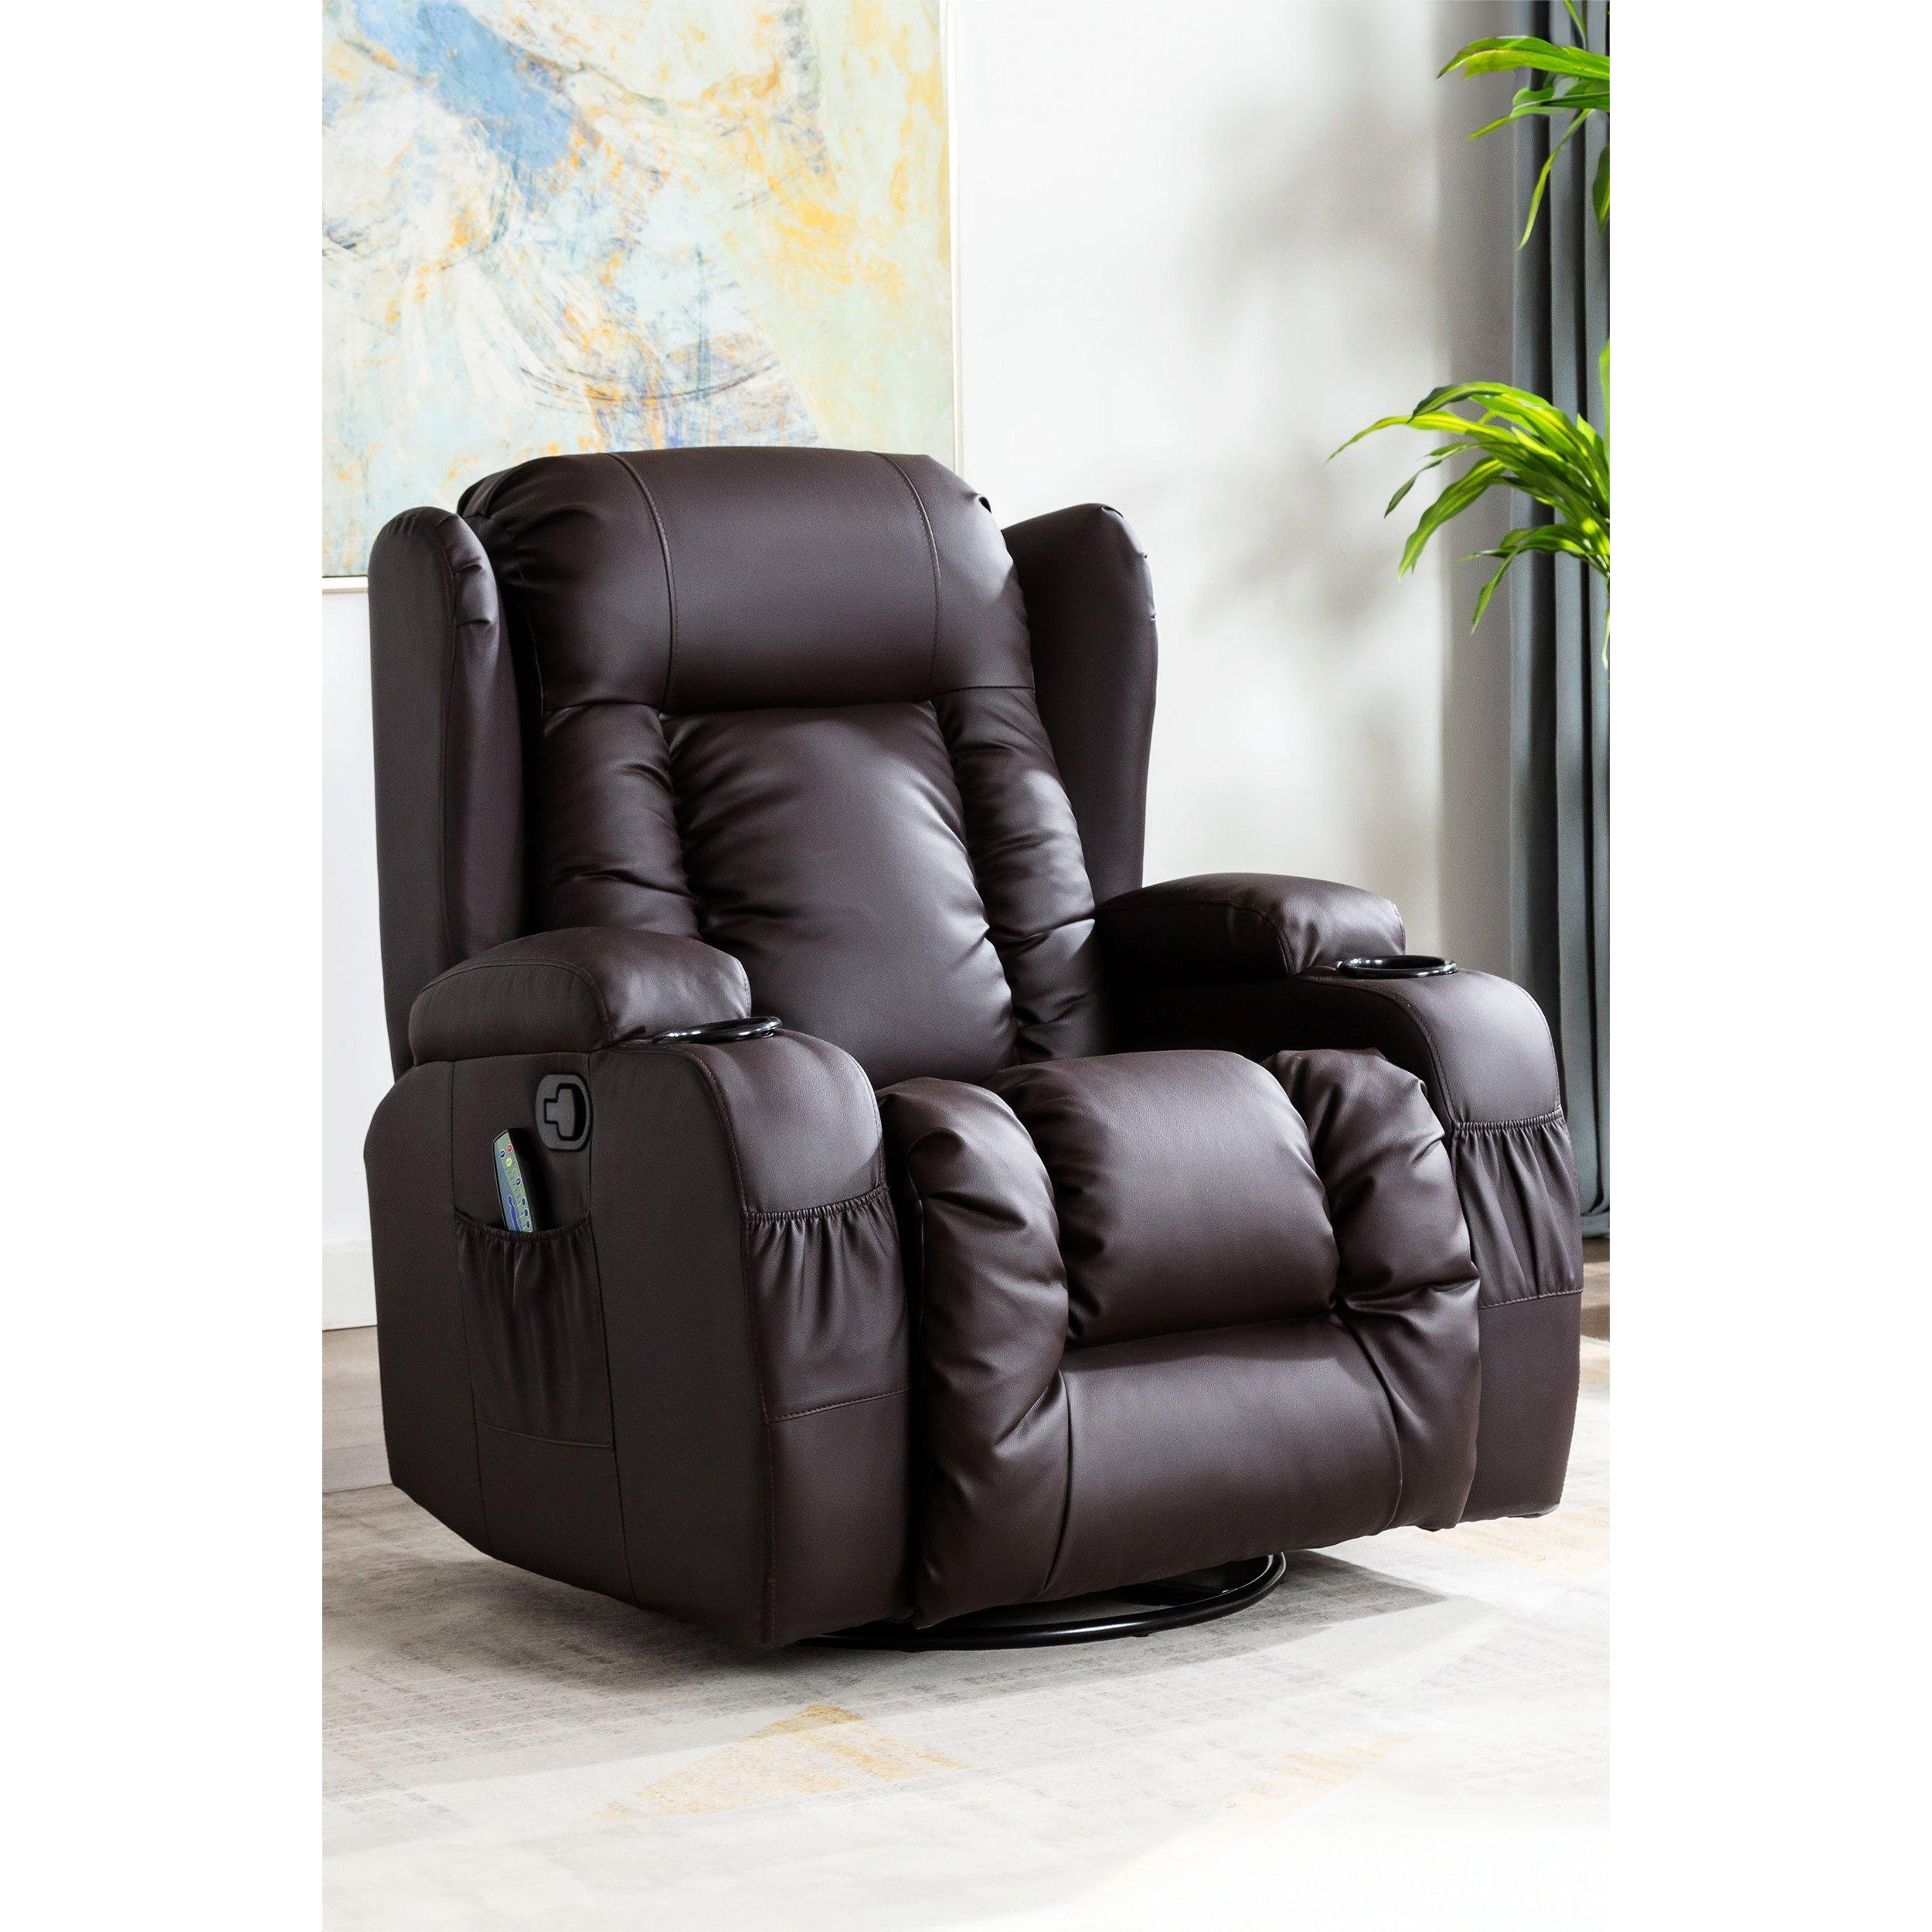 Caesar Bonded Leather Recliner Rocking Swivel Heat & Massage Chair - image 1